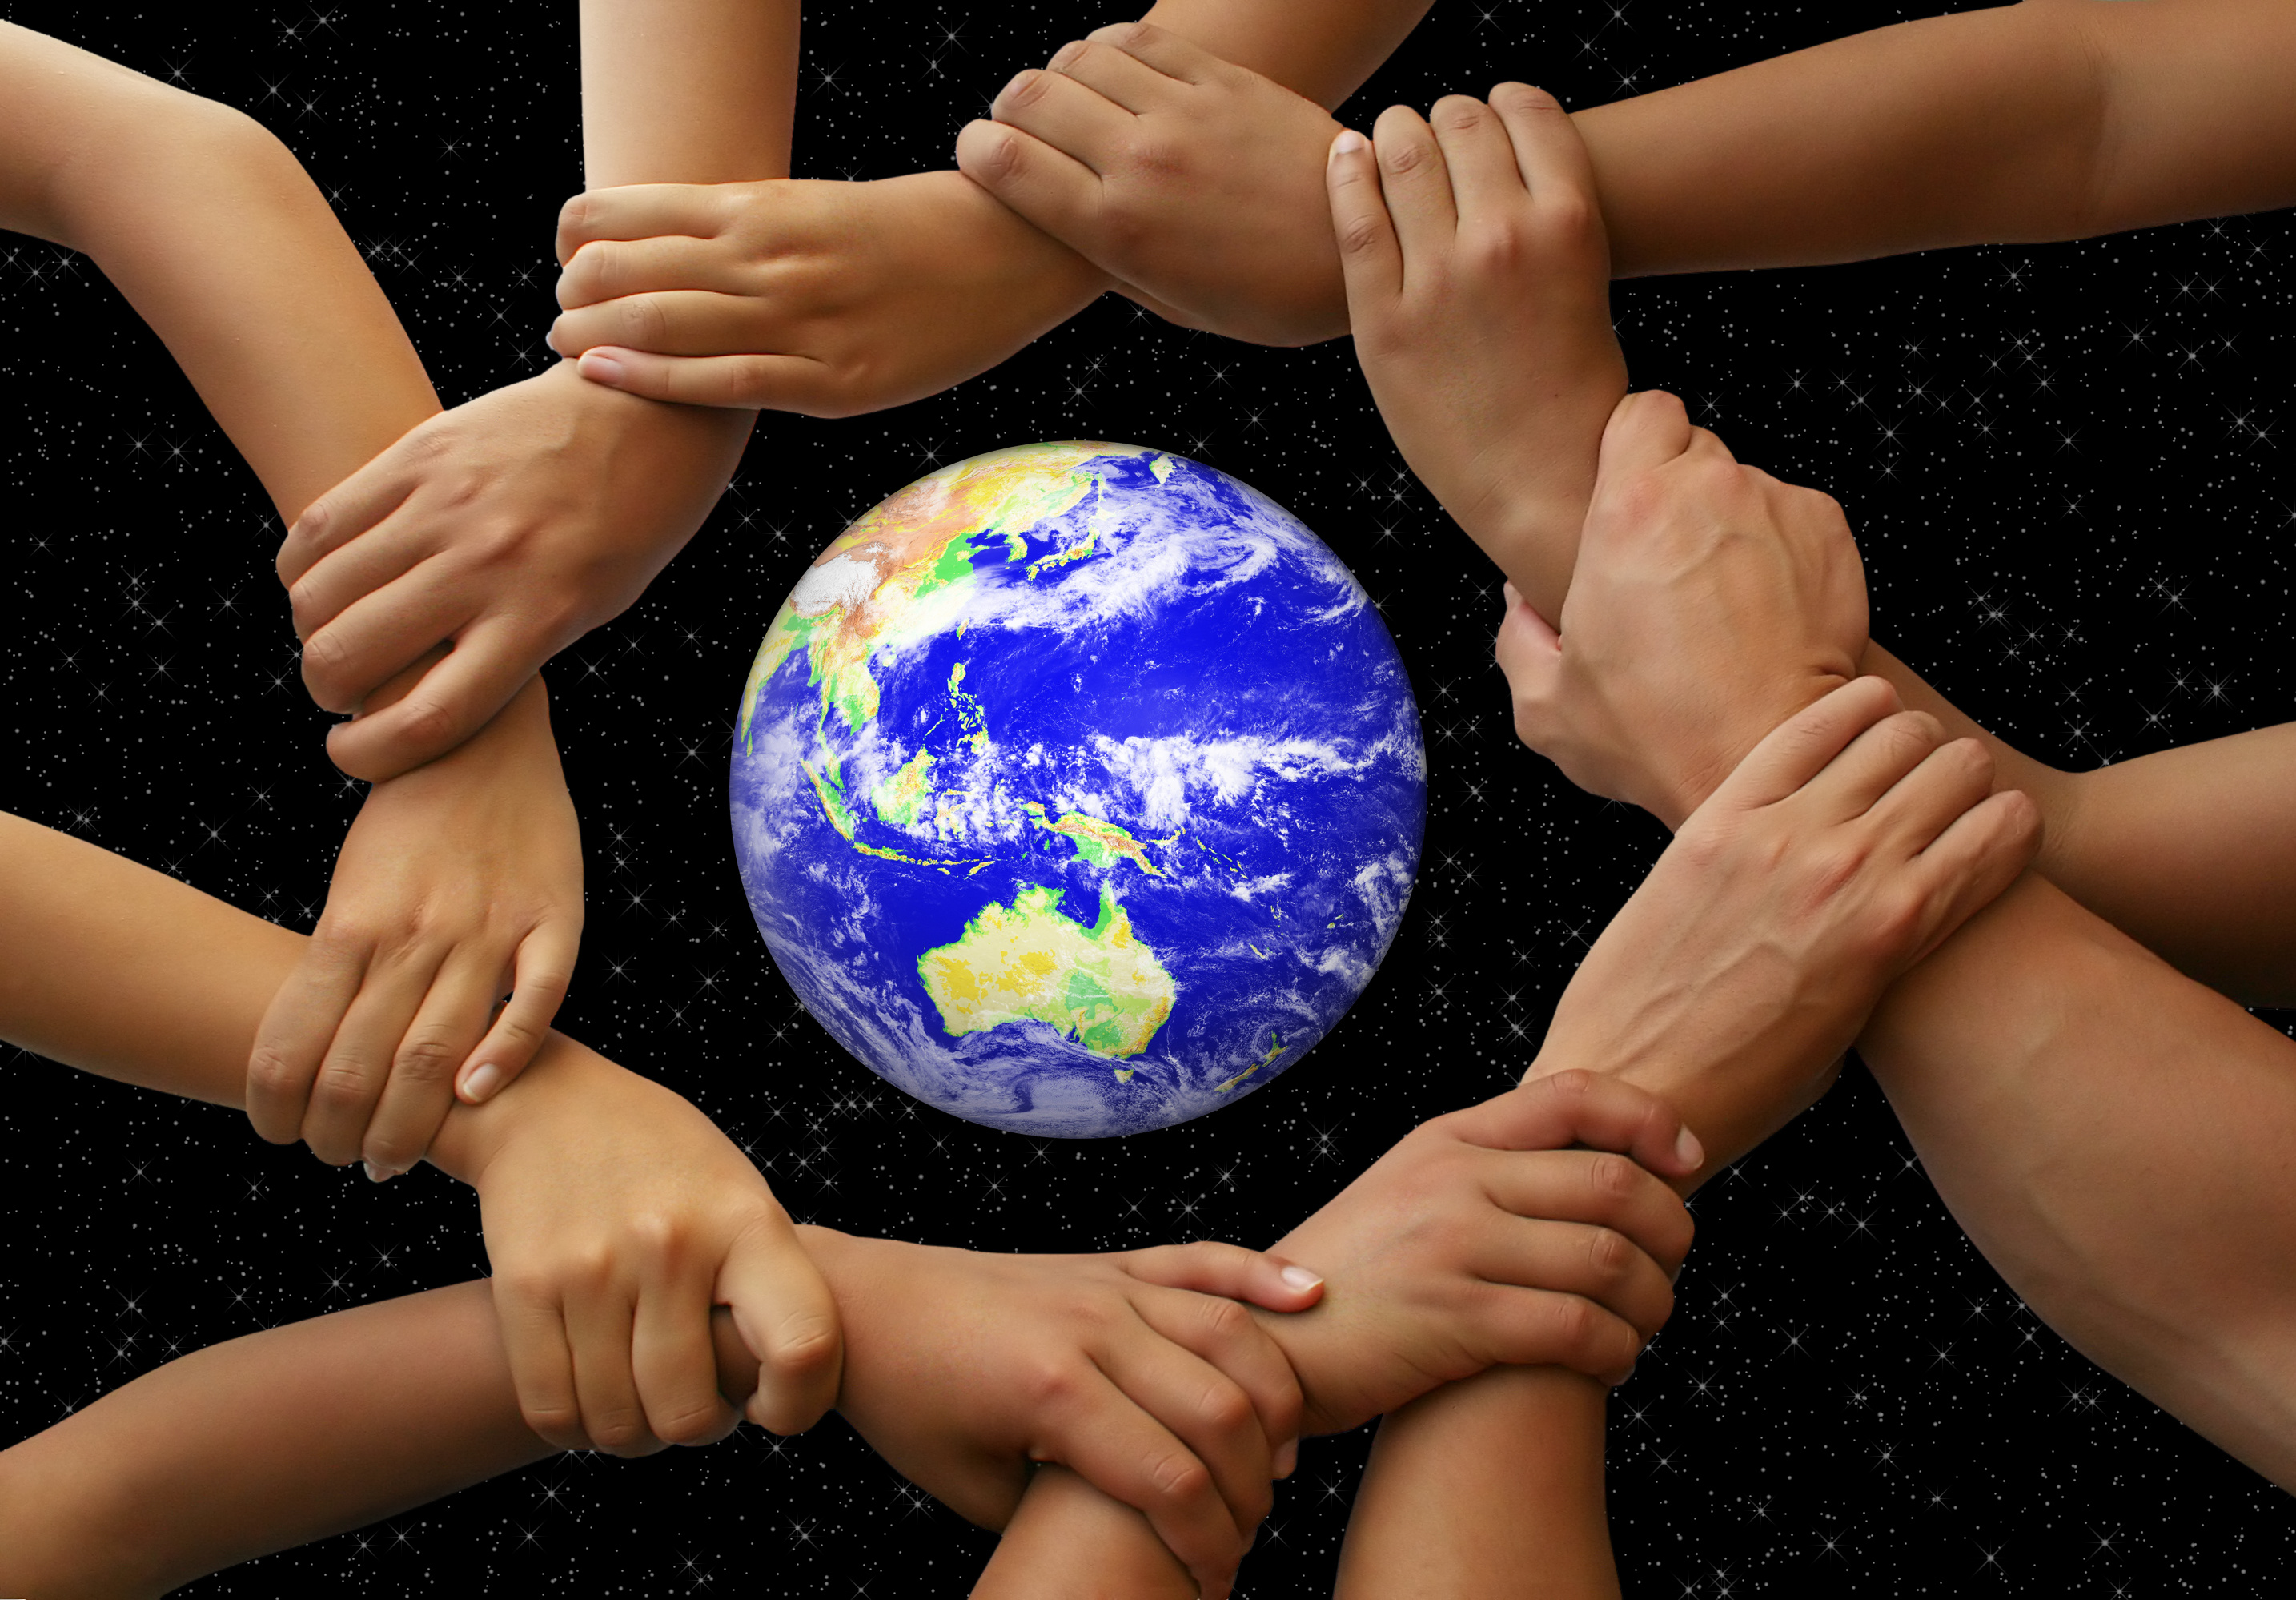 Обнимает планету. "И на земли мир…". Мир на планете. Дружат люди всей земли. Планета людей.